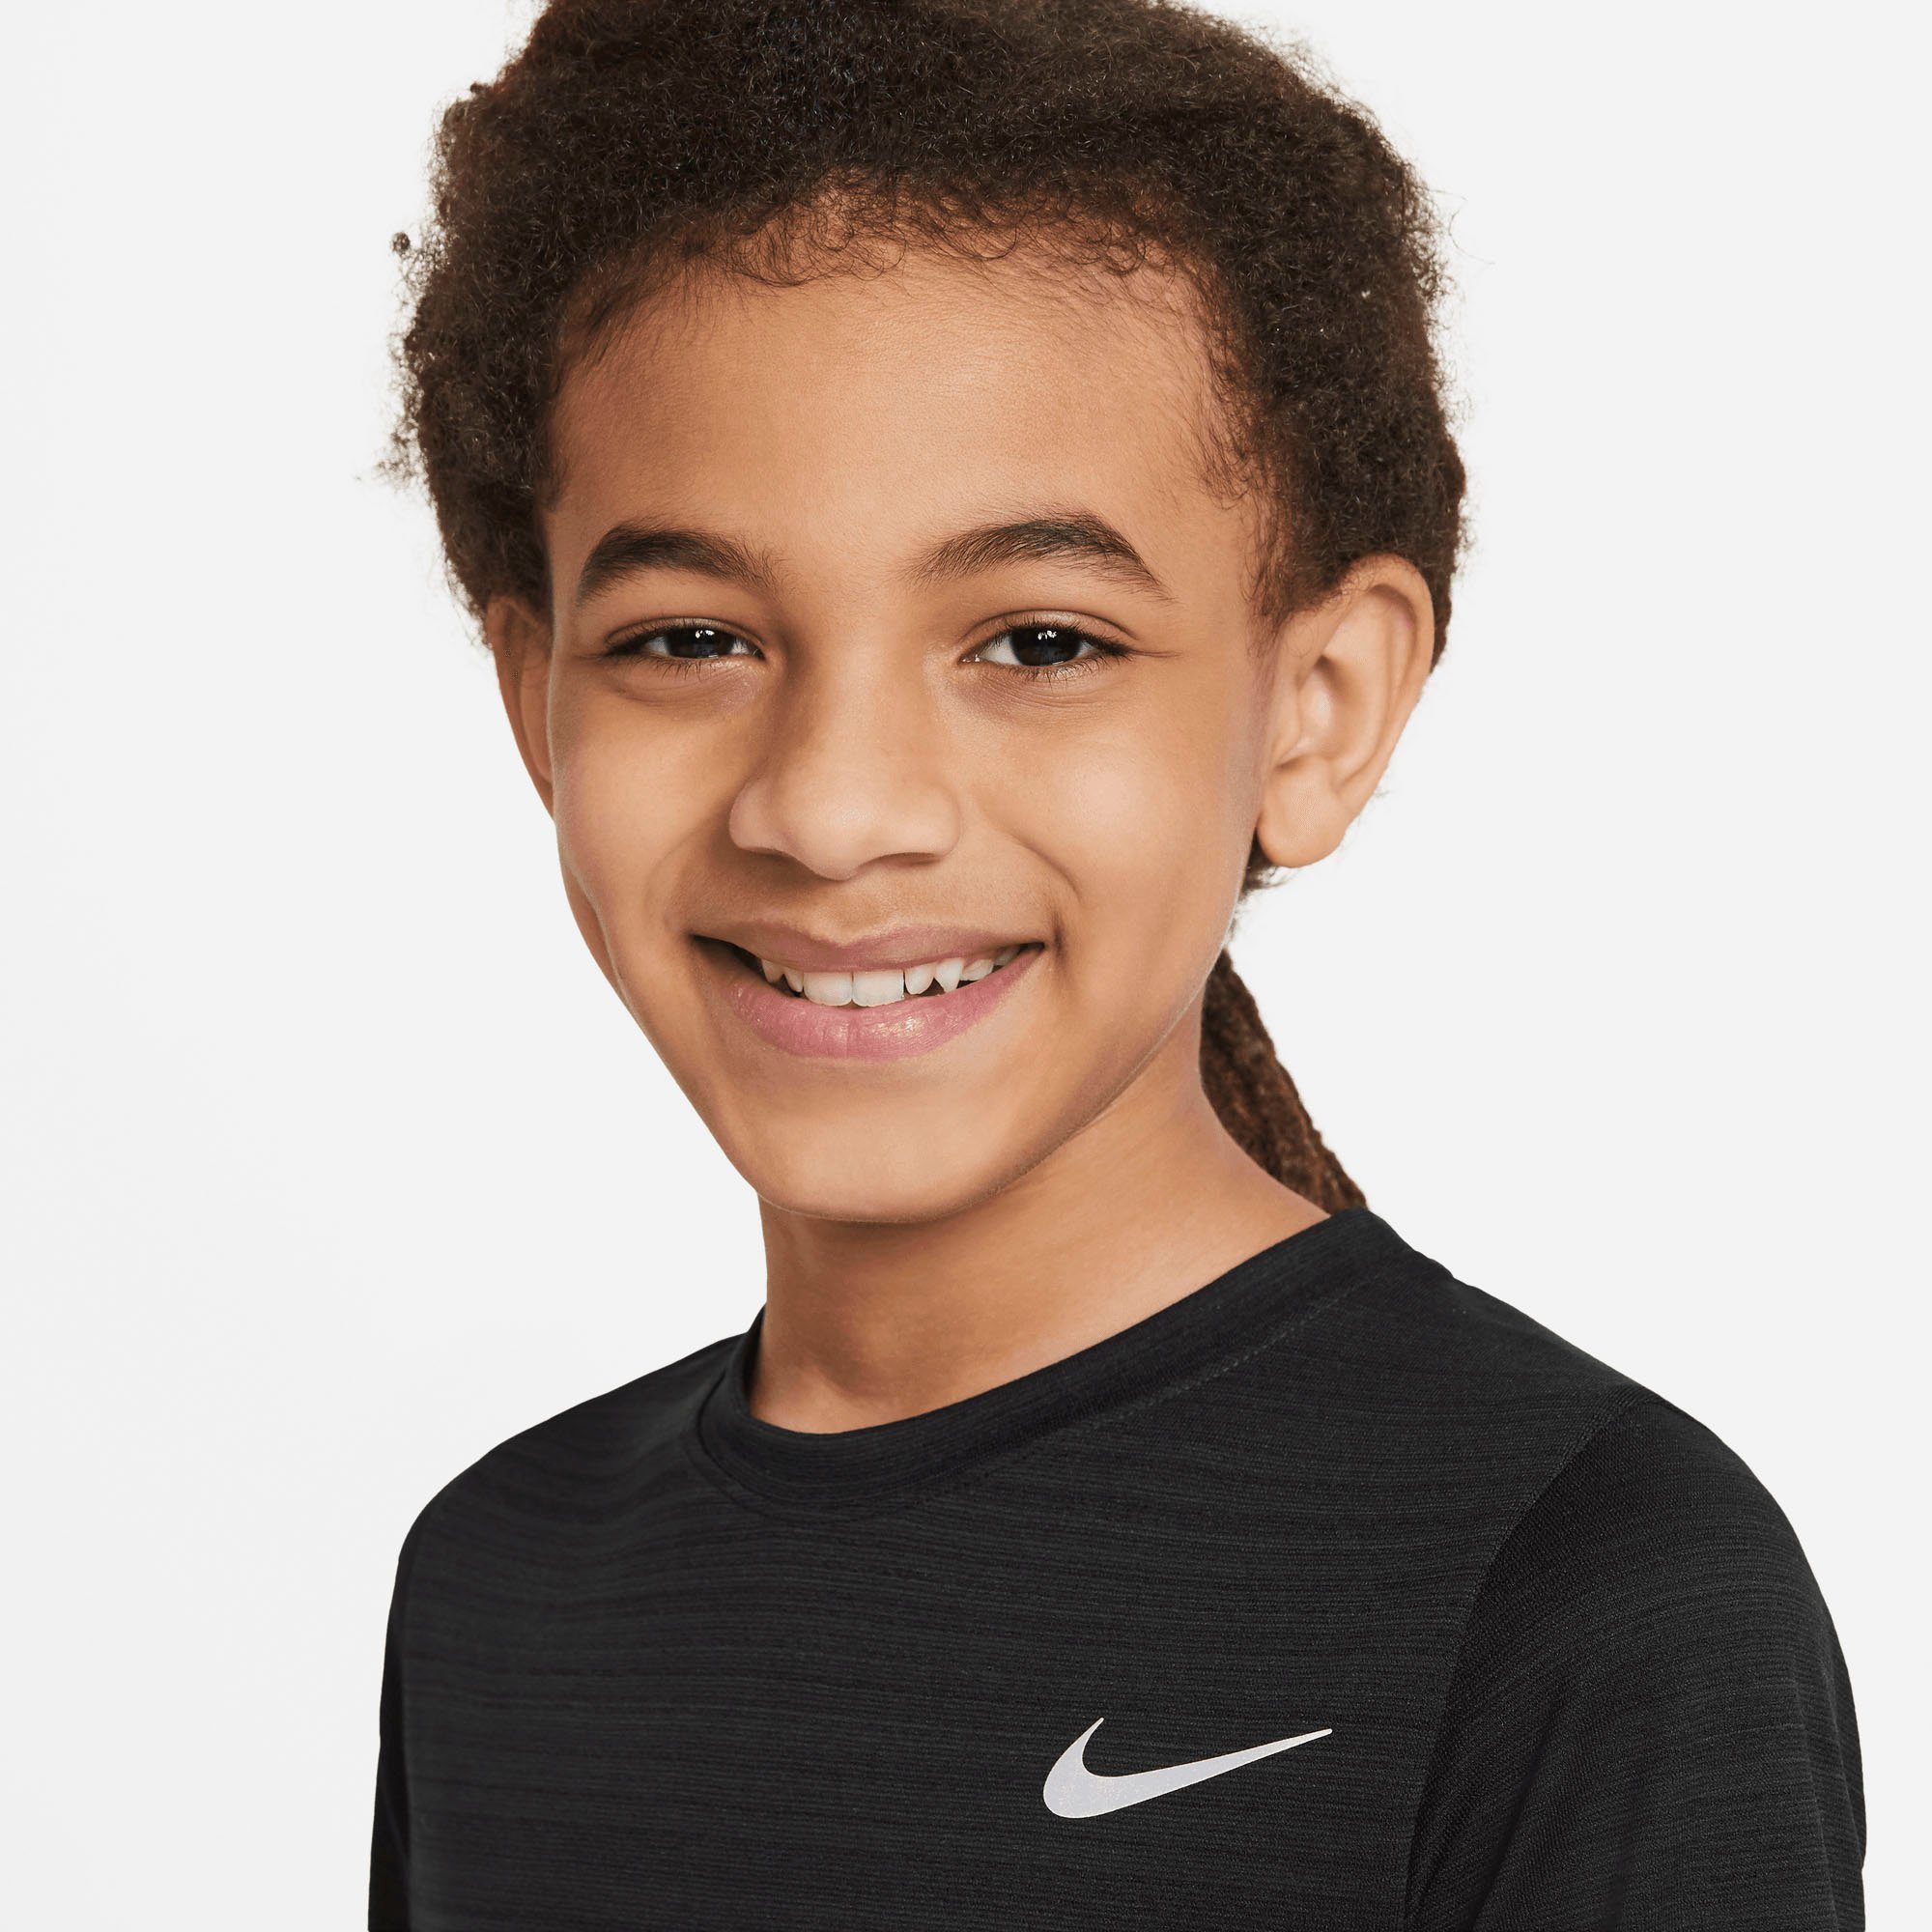 Miler Big Dri-FIT Nike Kids' Training Top BLACK Trainingsshirt (Boys)